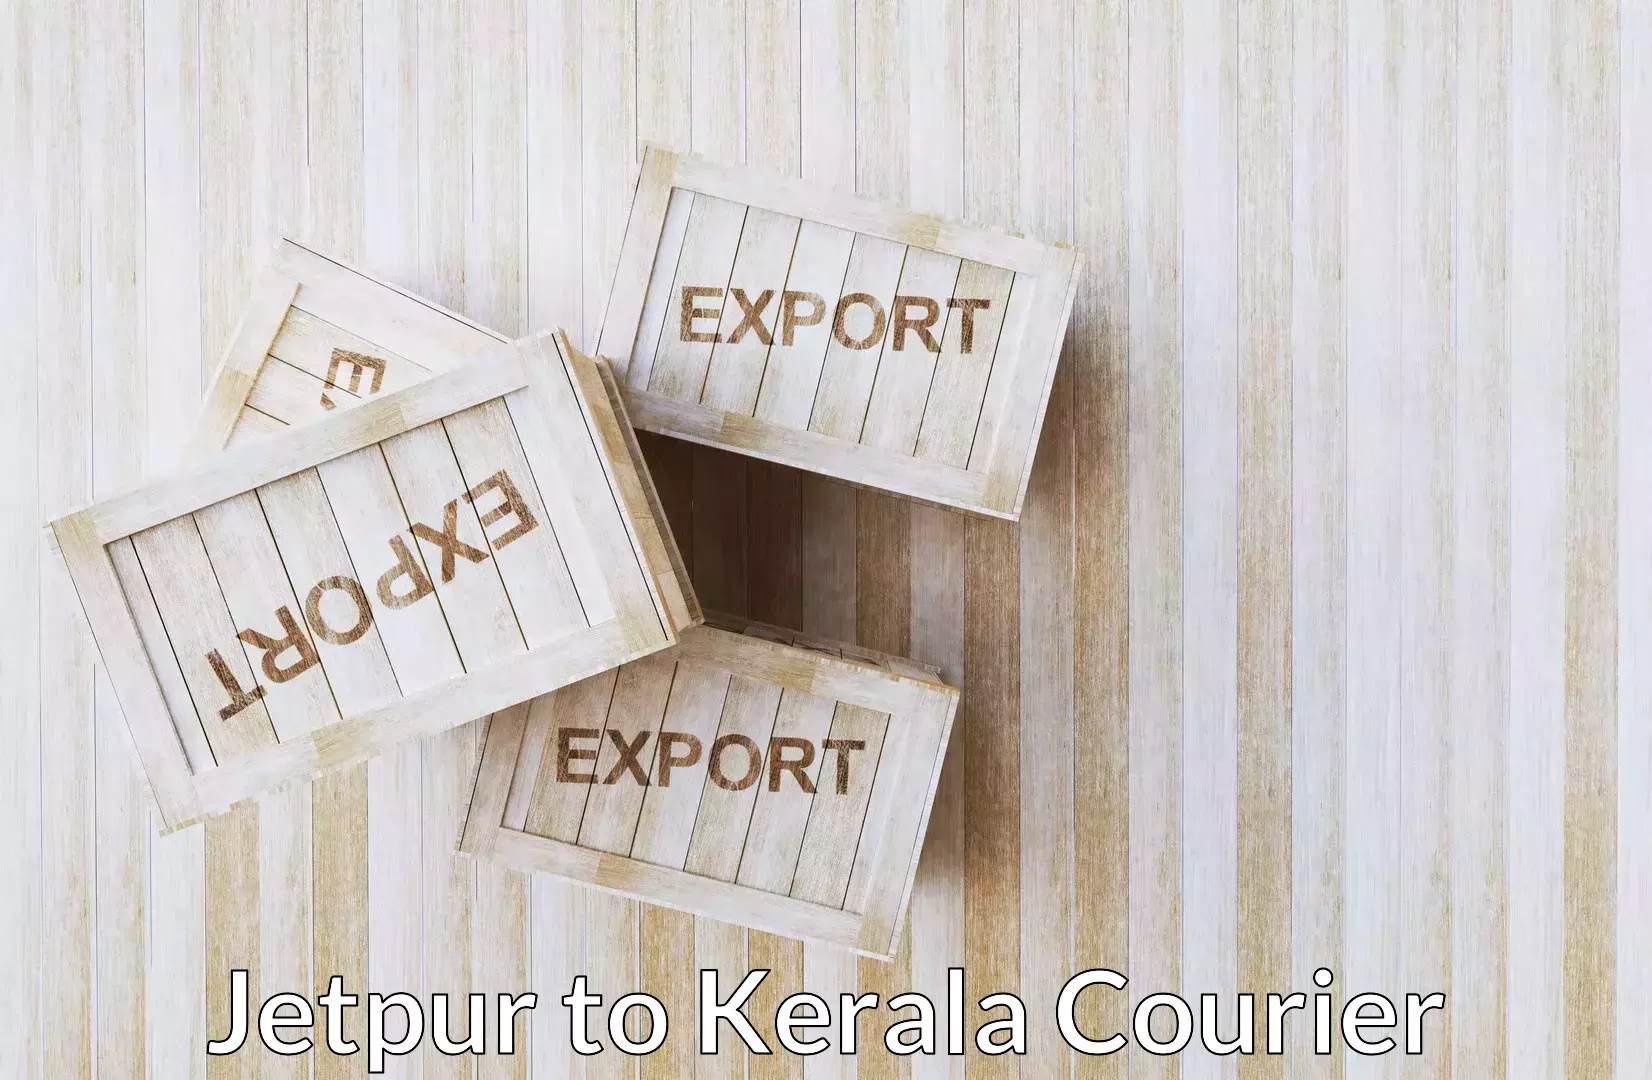 Luggage shipment tracking Jetpur to Kerala